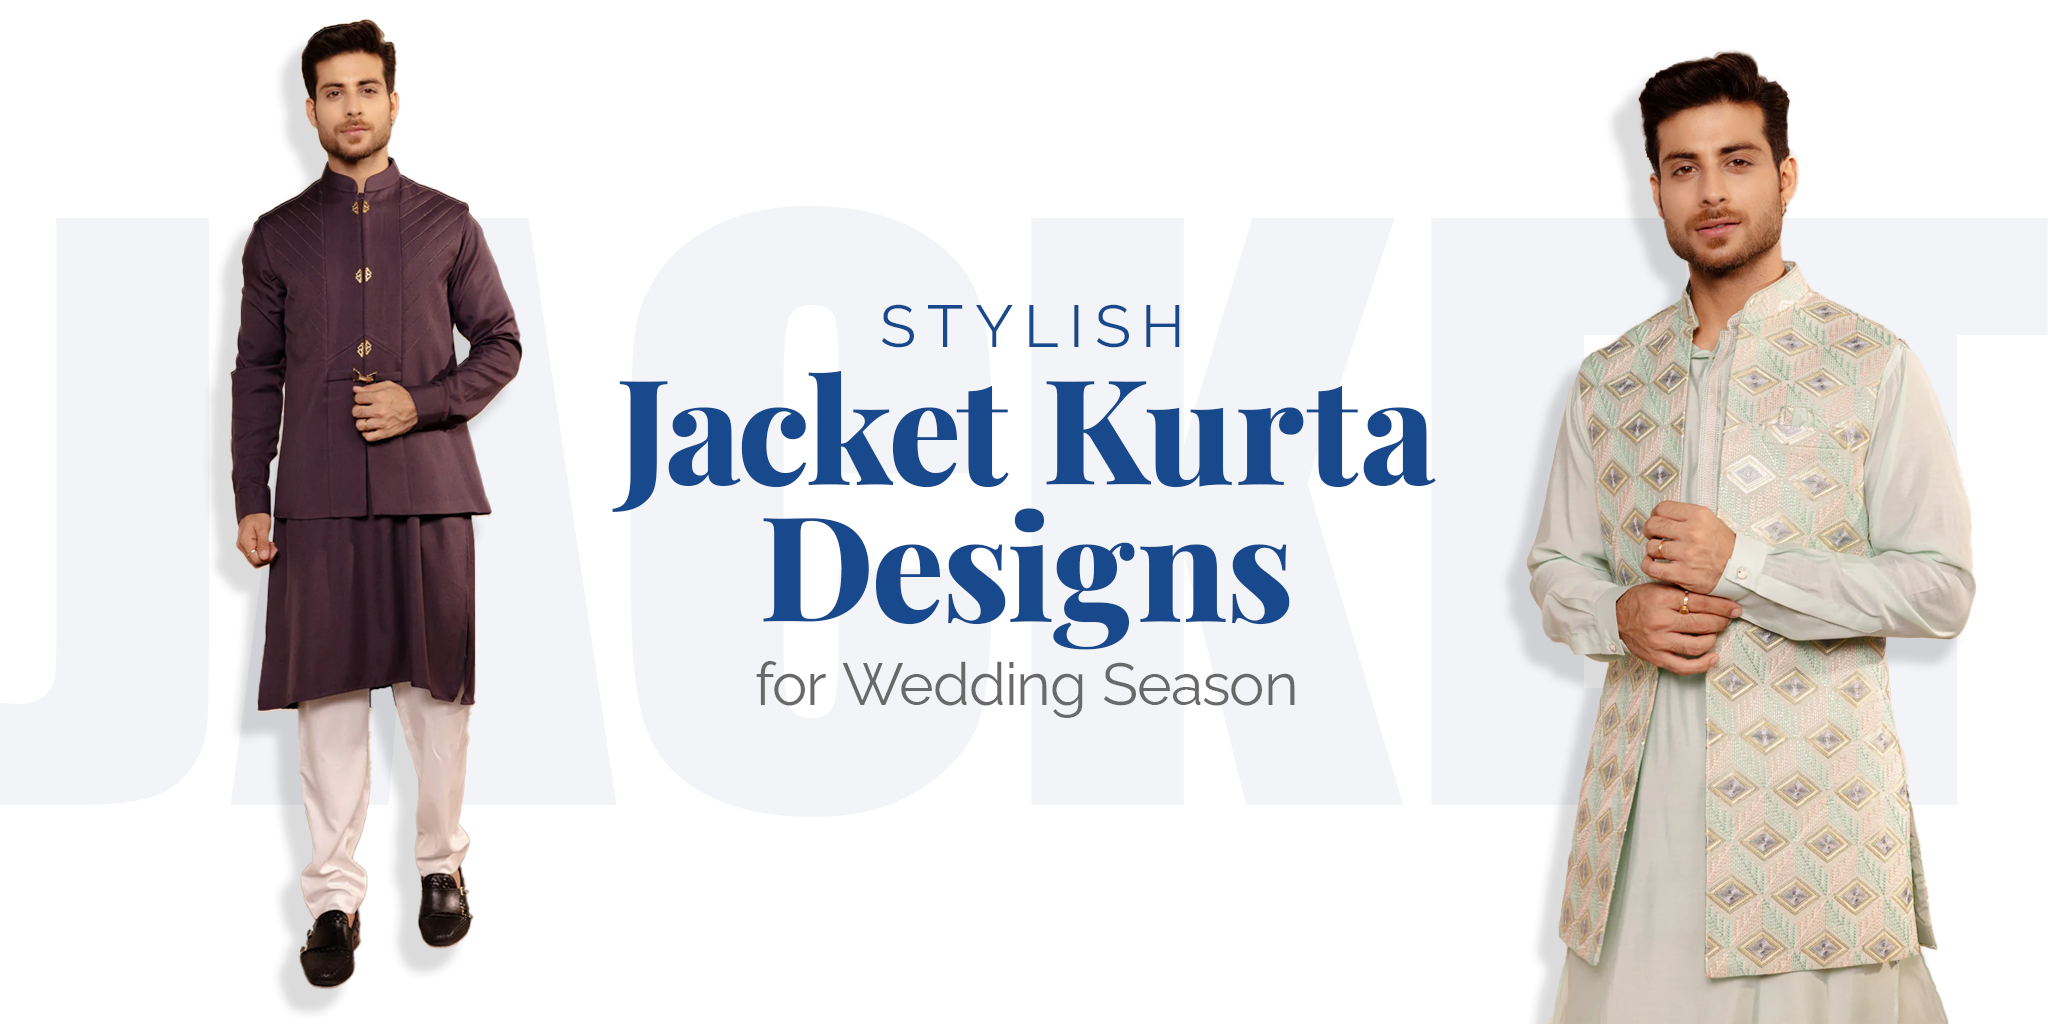 Stylish Jacket Kurta Designs for Wedding Season